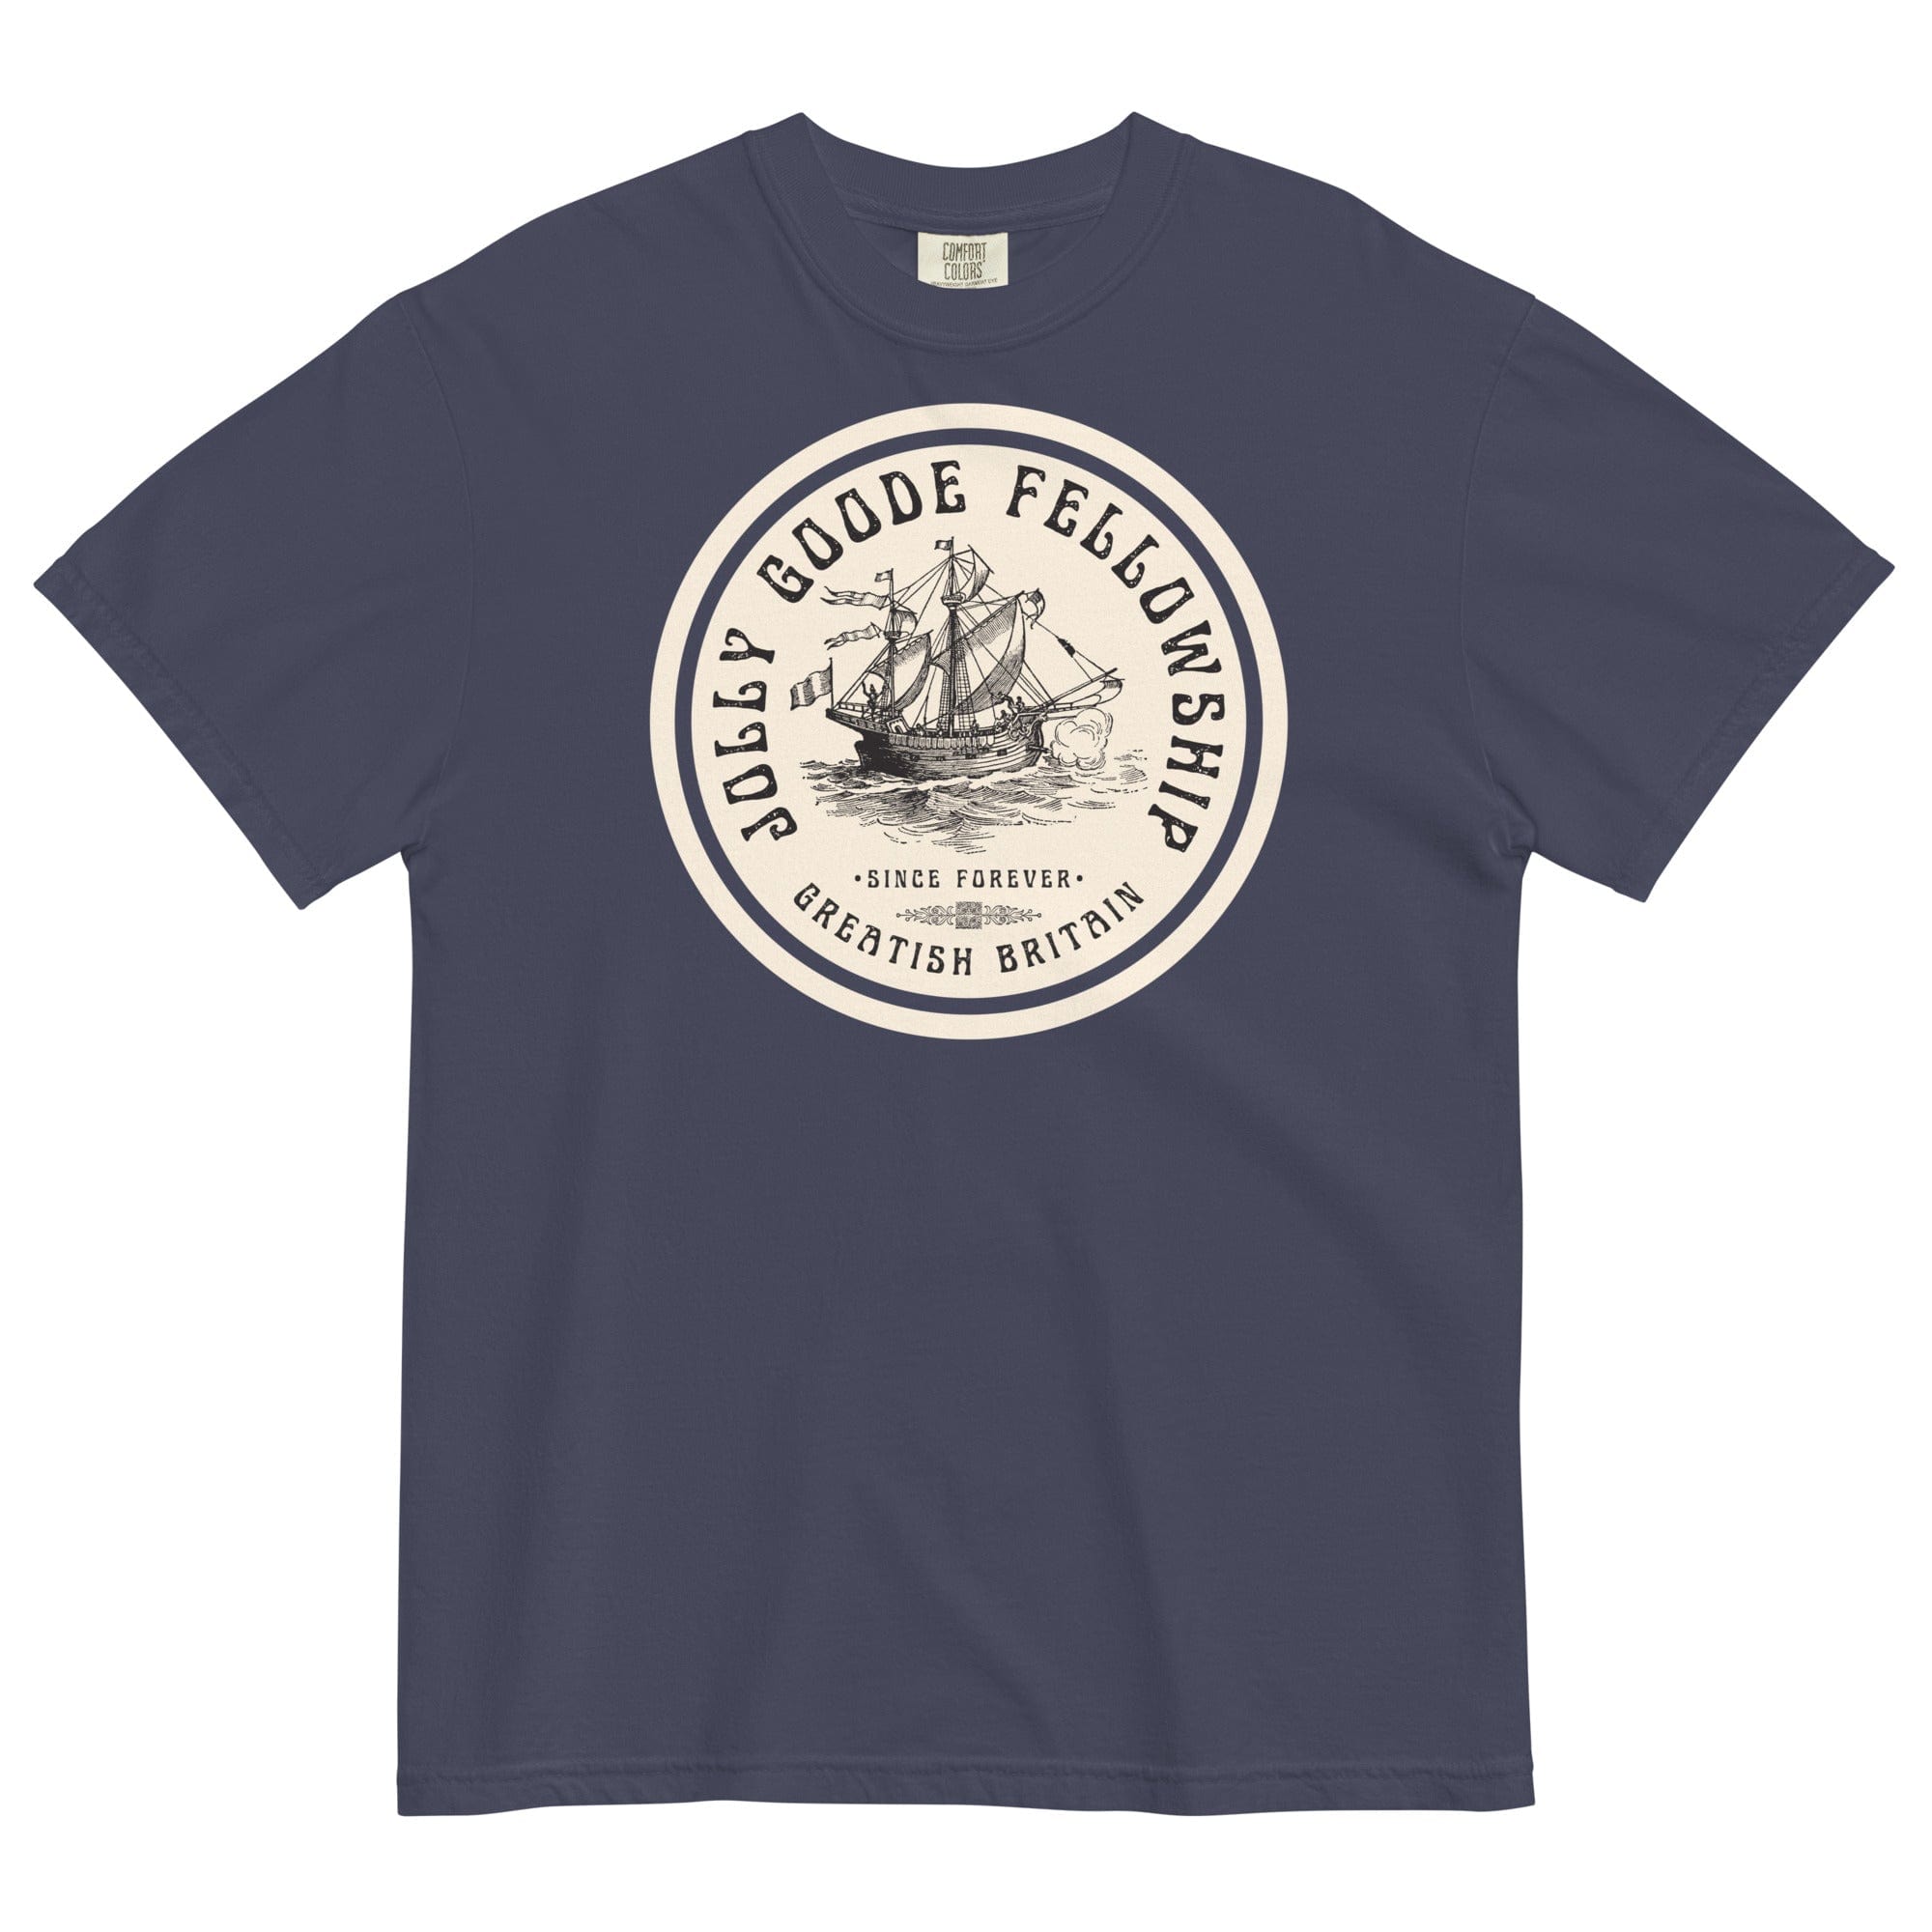 Jolly Goode Fellowship | Greatish Britain | Heavyweight T-shirt | Garment-Dyed True Navy / S Shirts & Tops Jolly & Goode